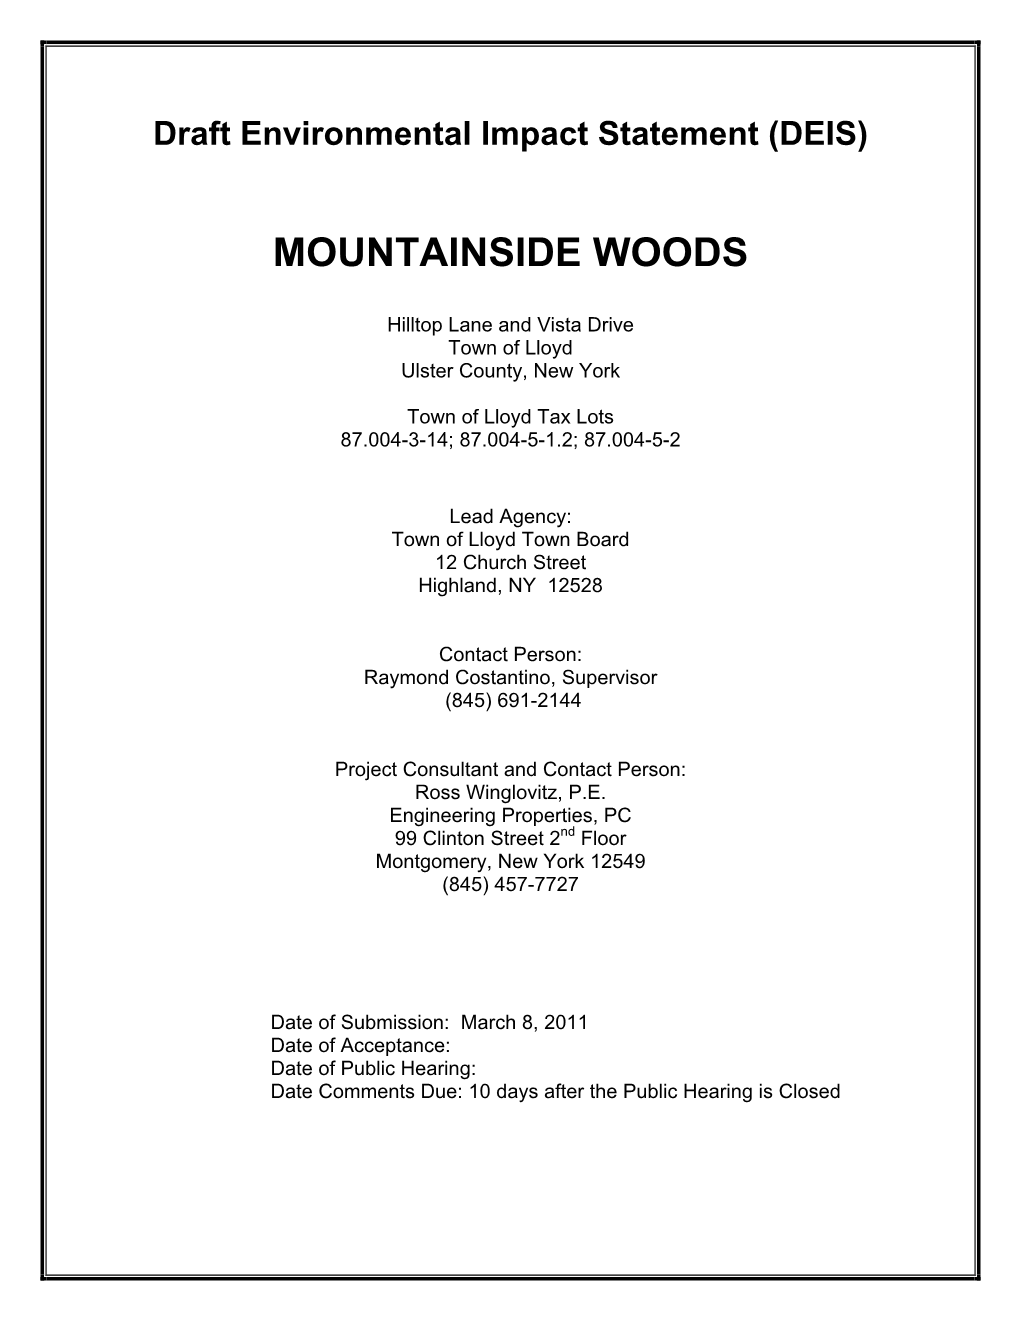 Mountainside Woods